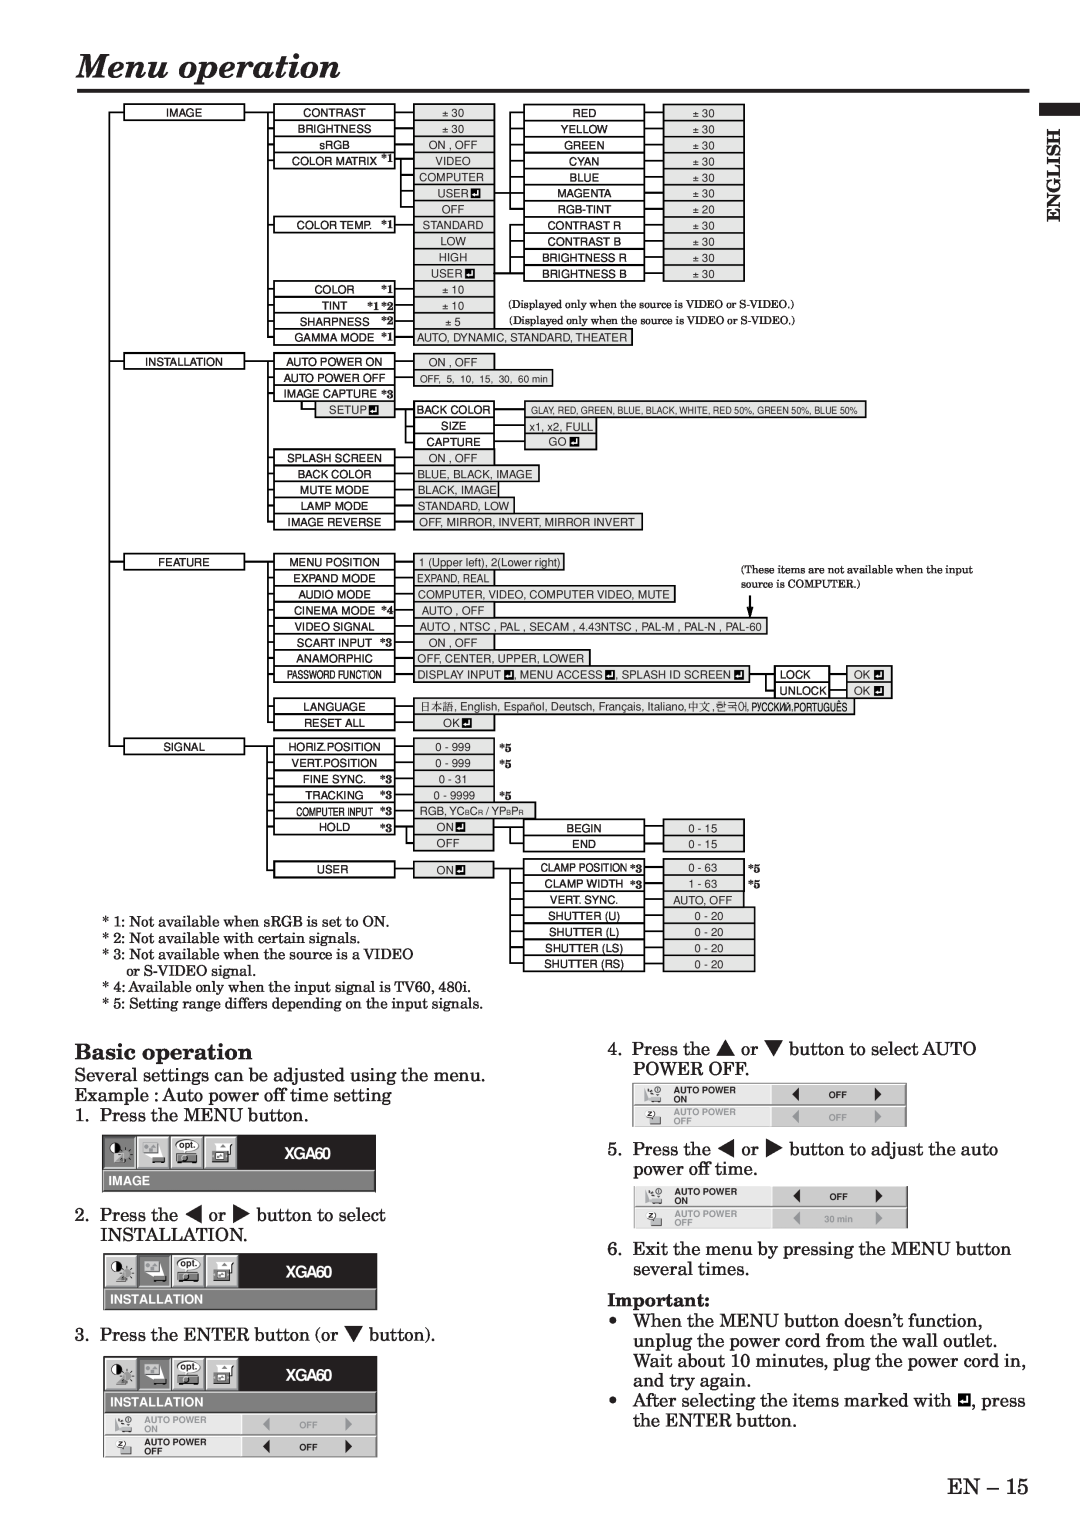 Mitsubishi Electronics XL5U user manual Menu operation, Basic operation, English, XGA60, Image, Installation, 1 *2 